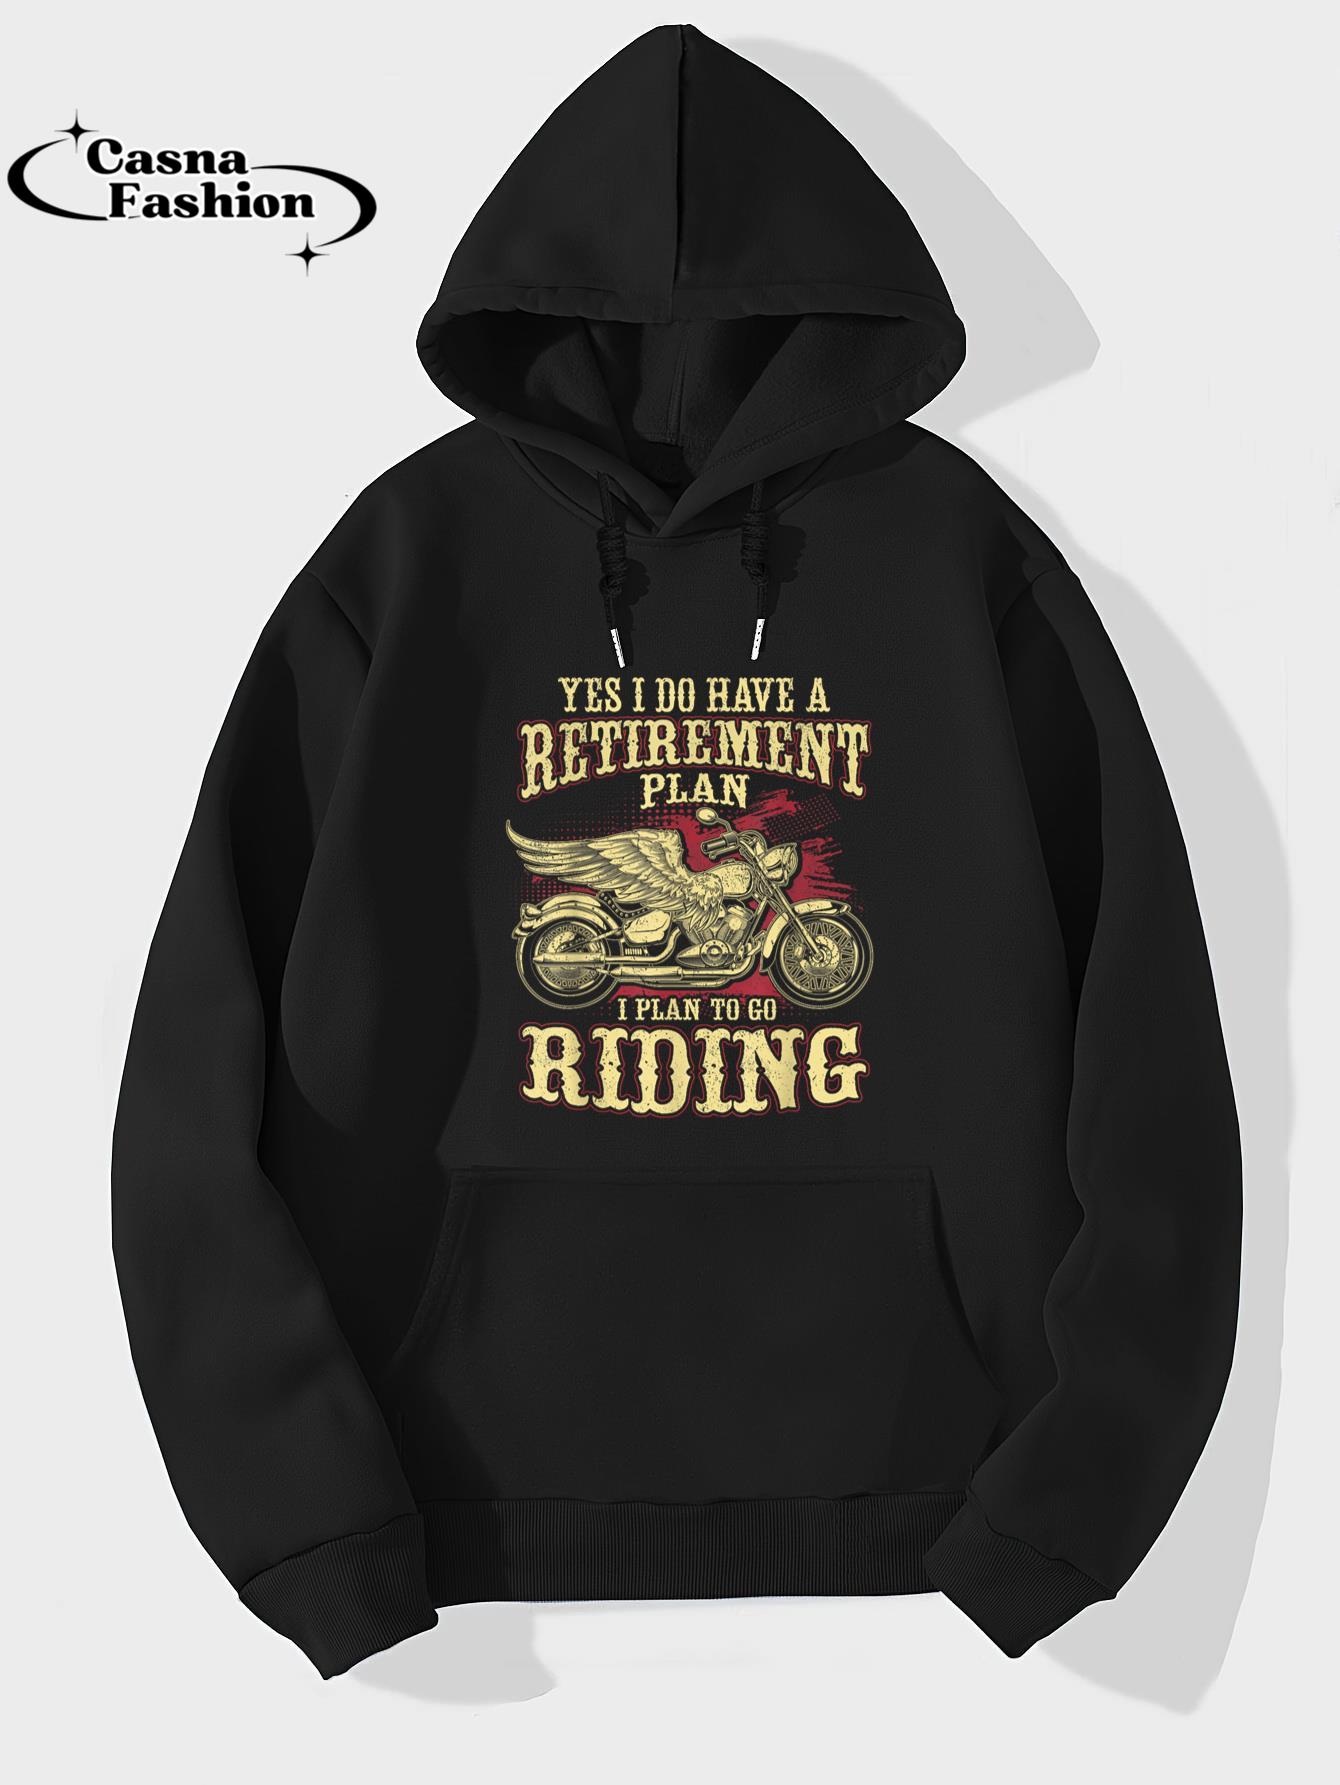 casnafashion_Hoodie_Retirement Plan To Go Riding Motorcycle Riders Biker Gifts T-Shirt_hoodie_black hoodie